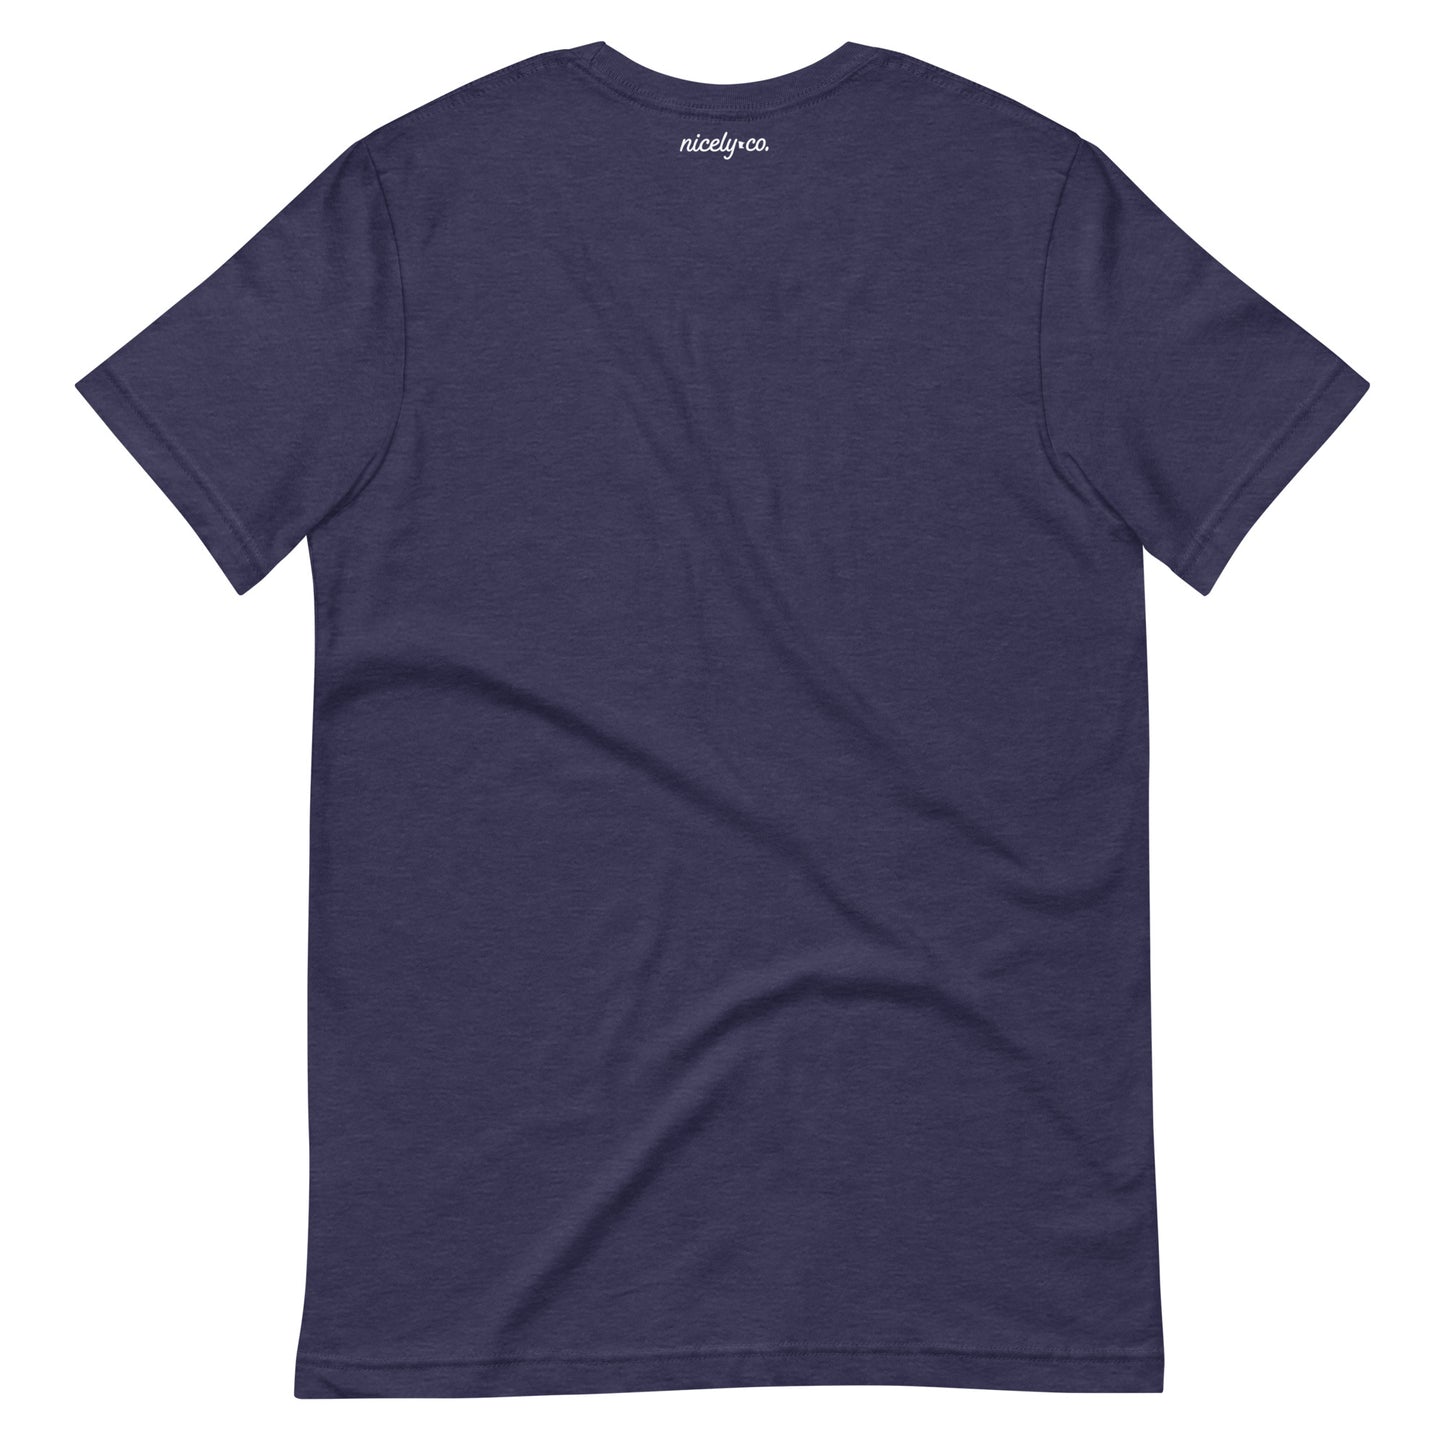 Navy Walleye T-Shirt